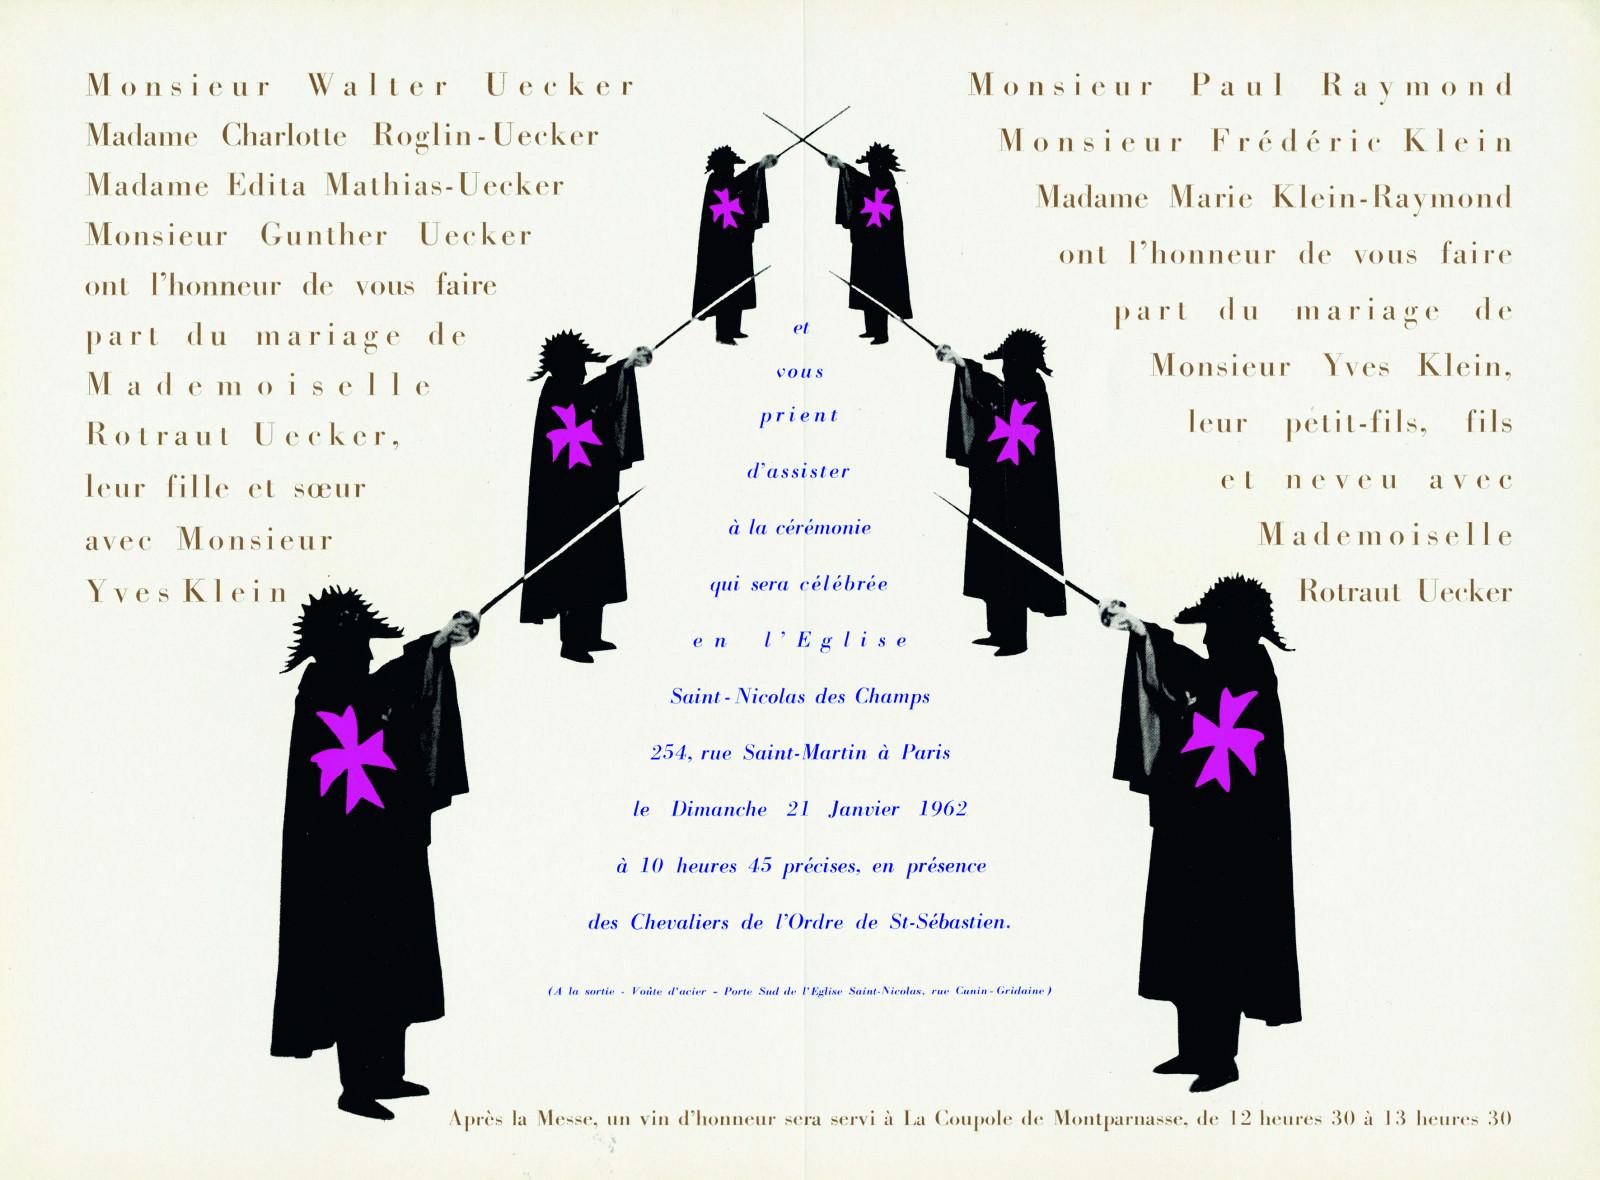 Yves Klein and Rotraut Uecker's wedding invitation